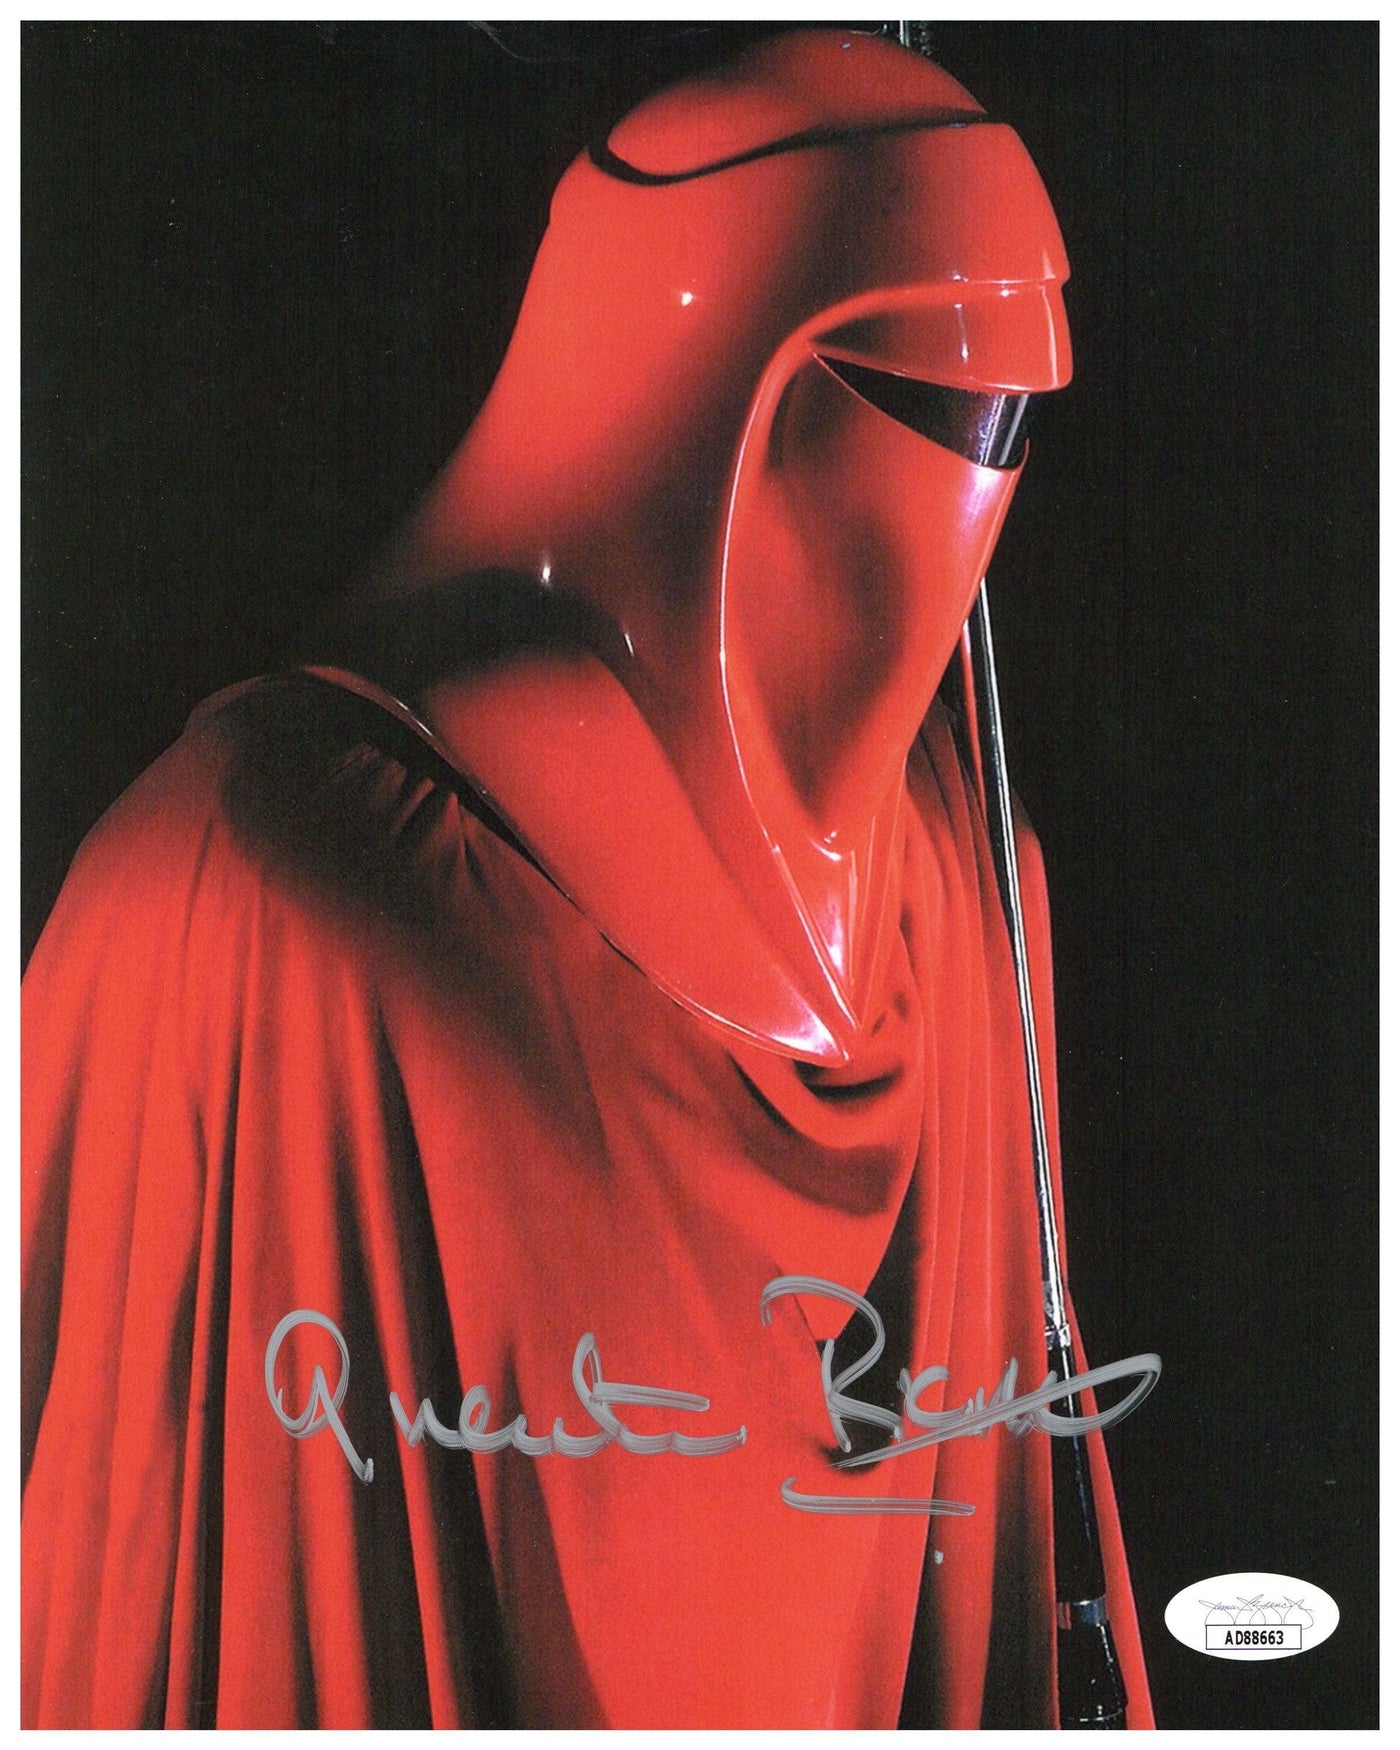 Quentin Pierre Autographed 8x10 Photo Star Wars Emperor Royal Guard Beckett COA